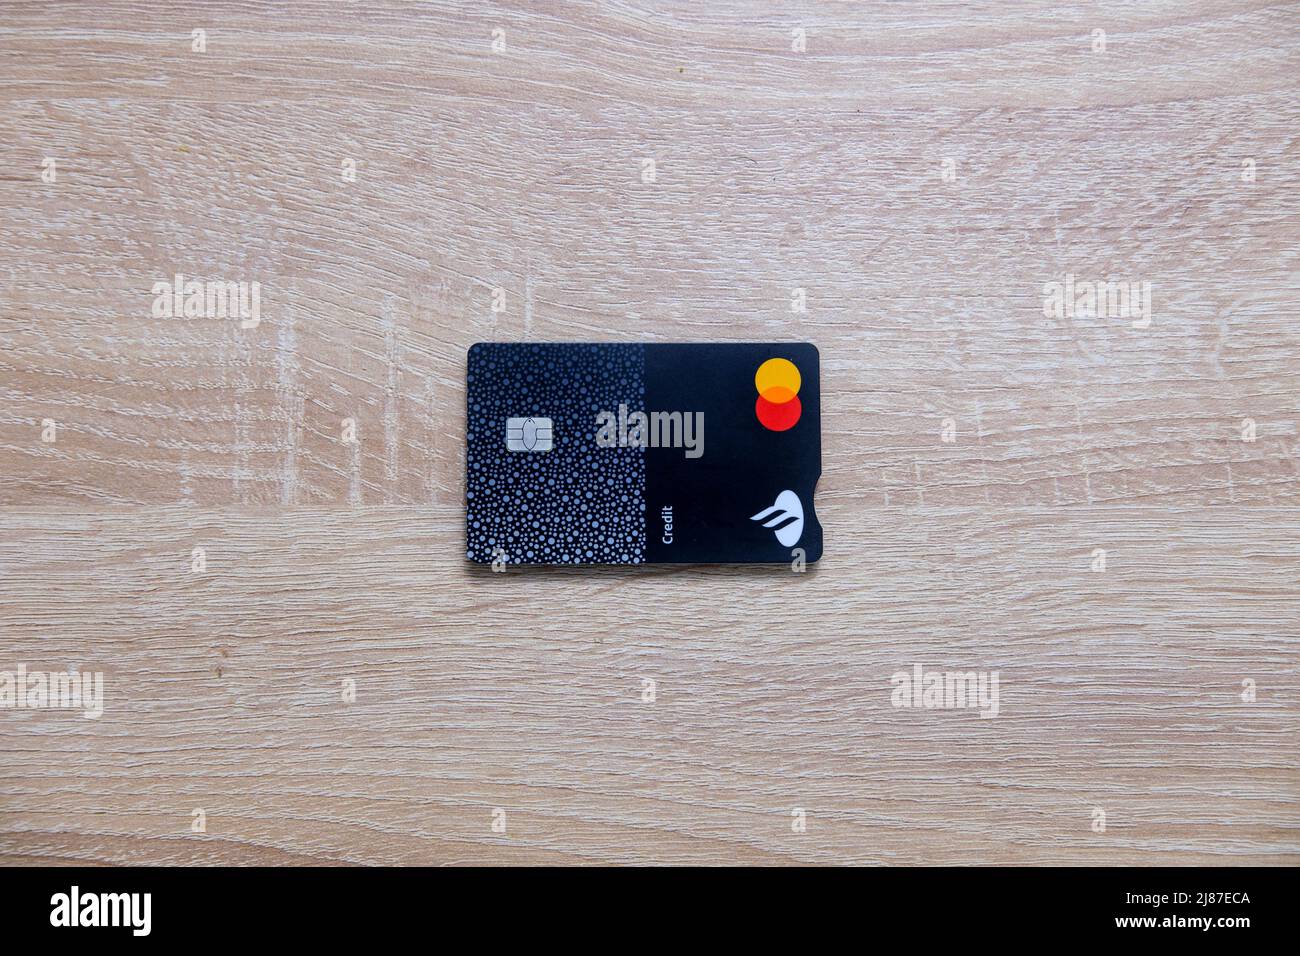 Castelo Branco, Portugal - May 13 2022: Top down shot of Santander credit card on wood counter Stock Photo